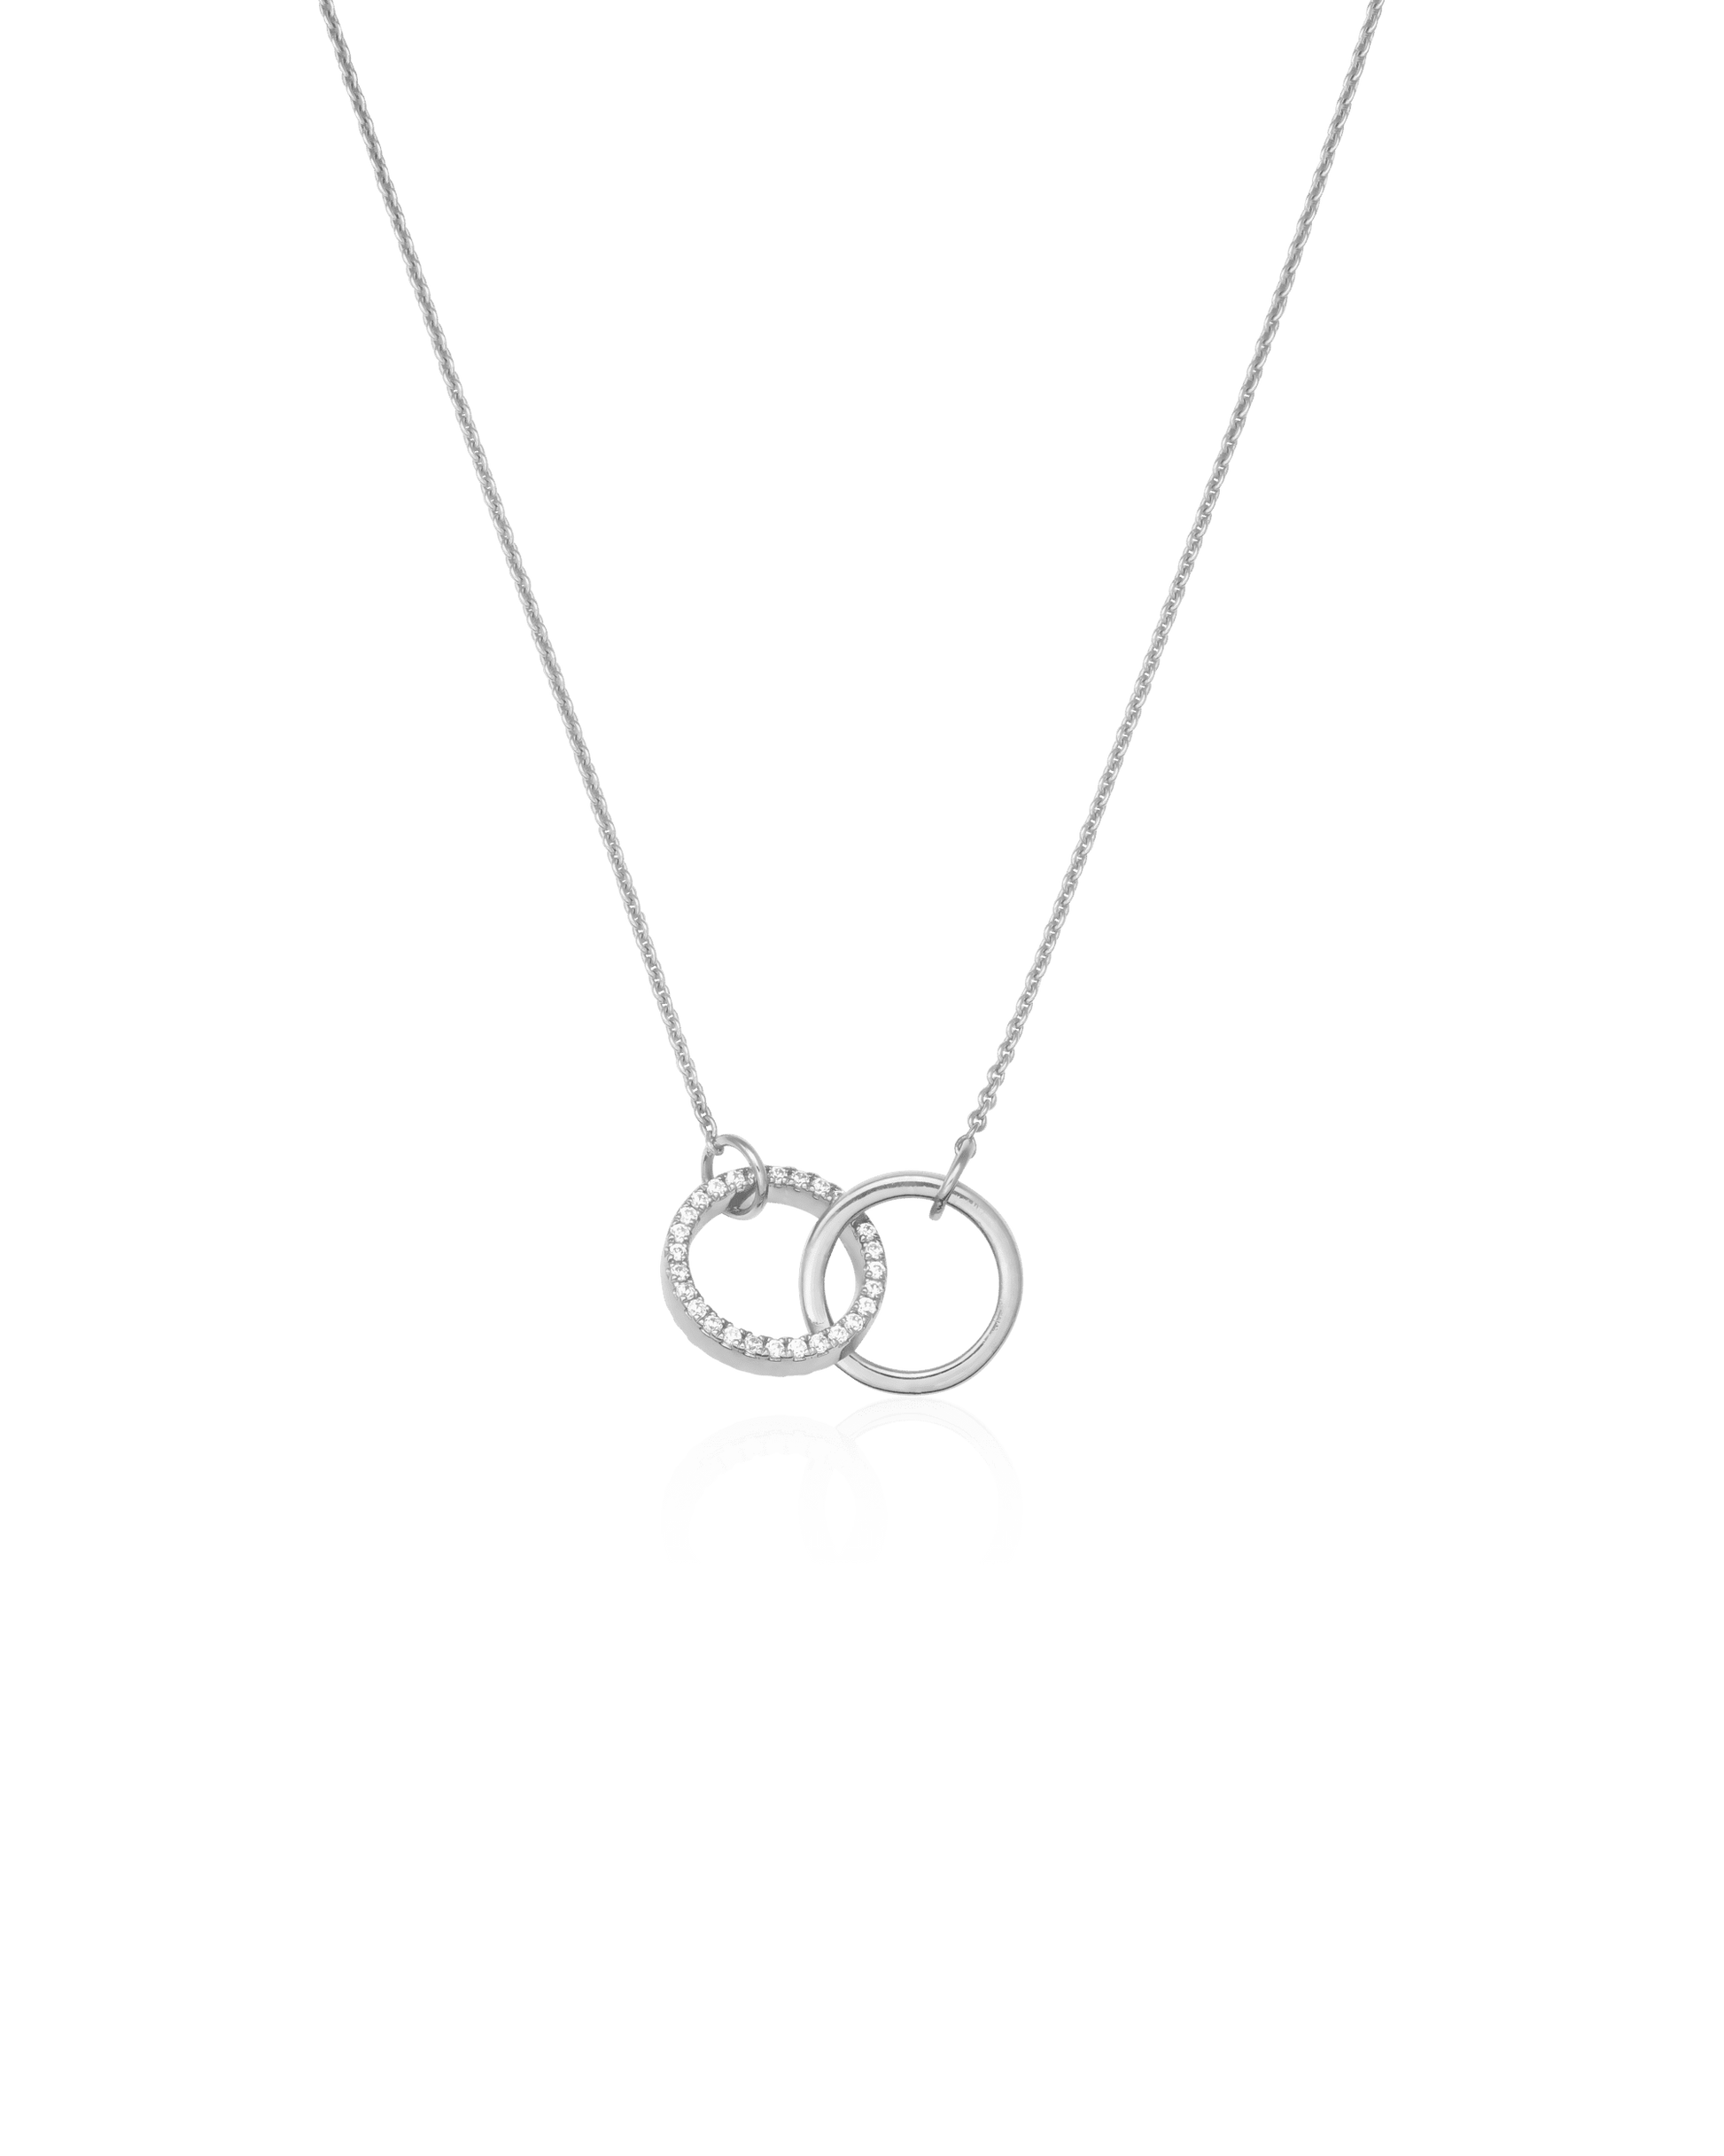 Interlocking Necklace - 18K Gold Vermeil Necklaces magal-dev 